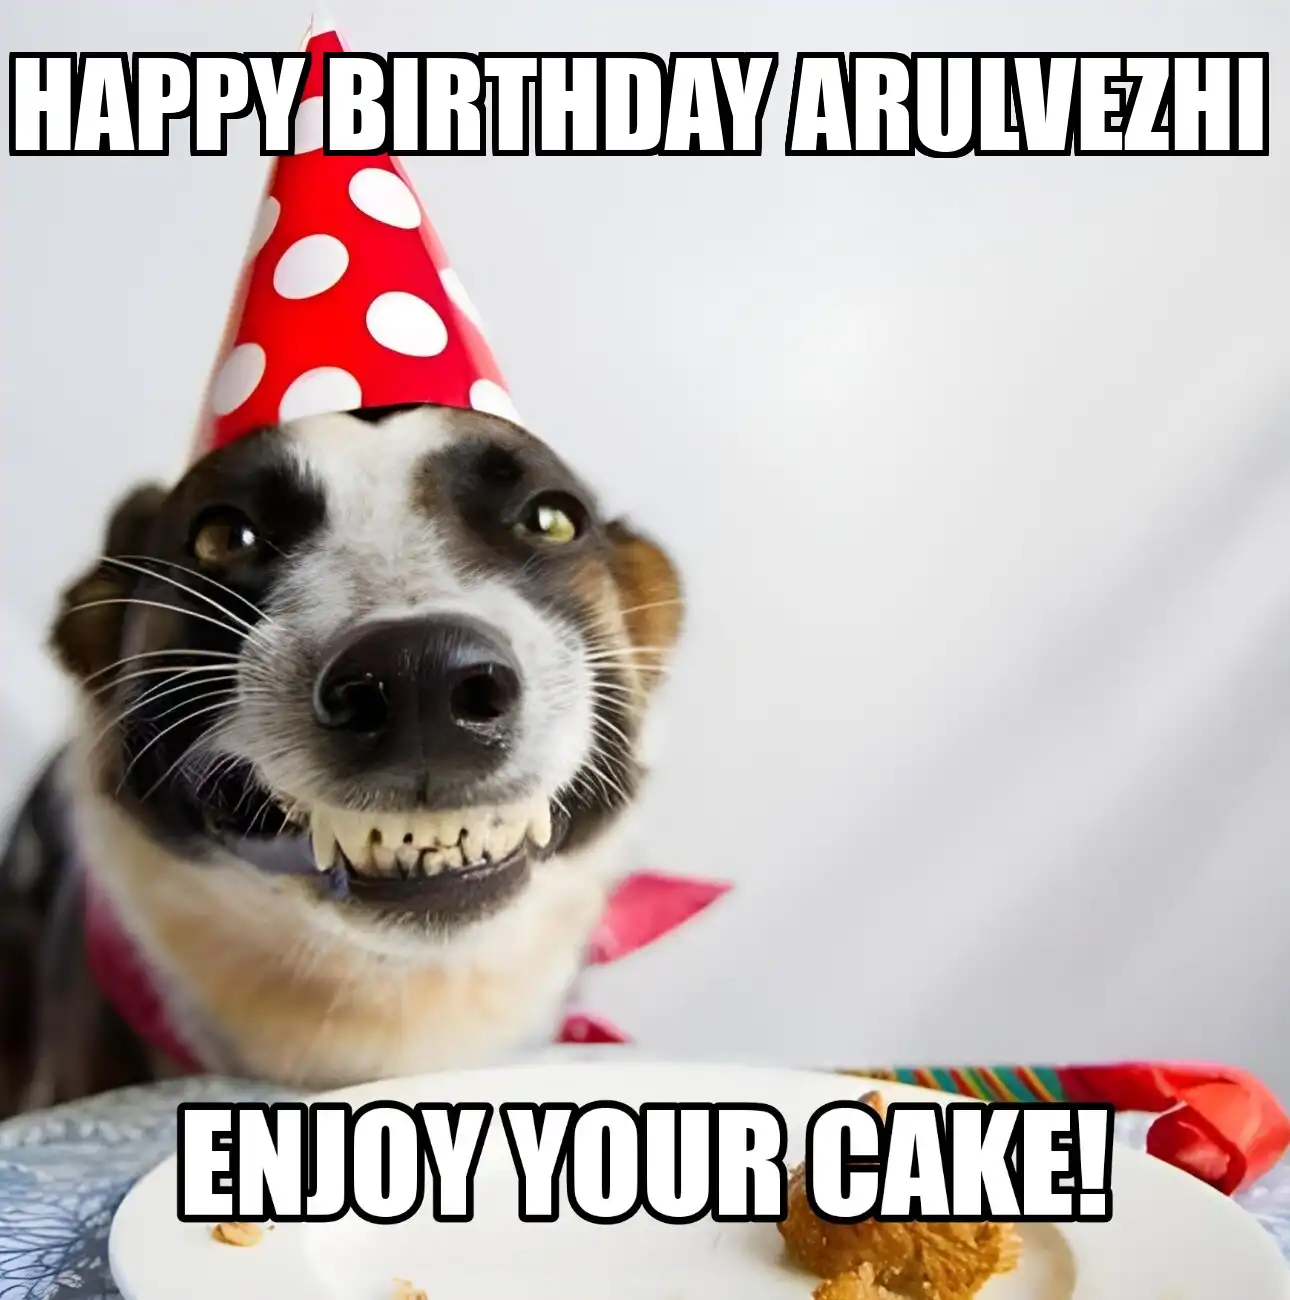 Happy Birthday Arulvezhi Enjoy Your Cake Dog Meme